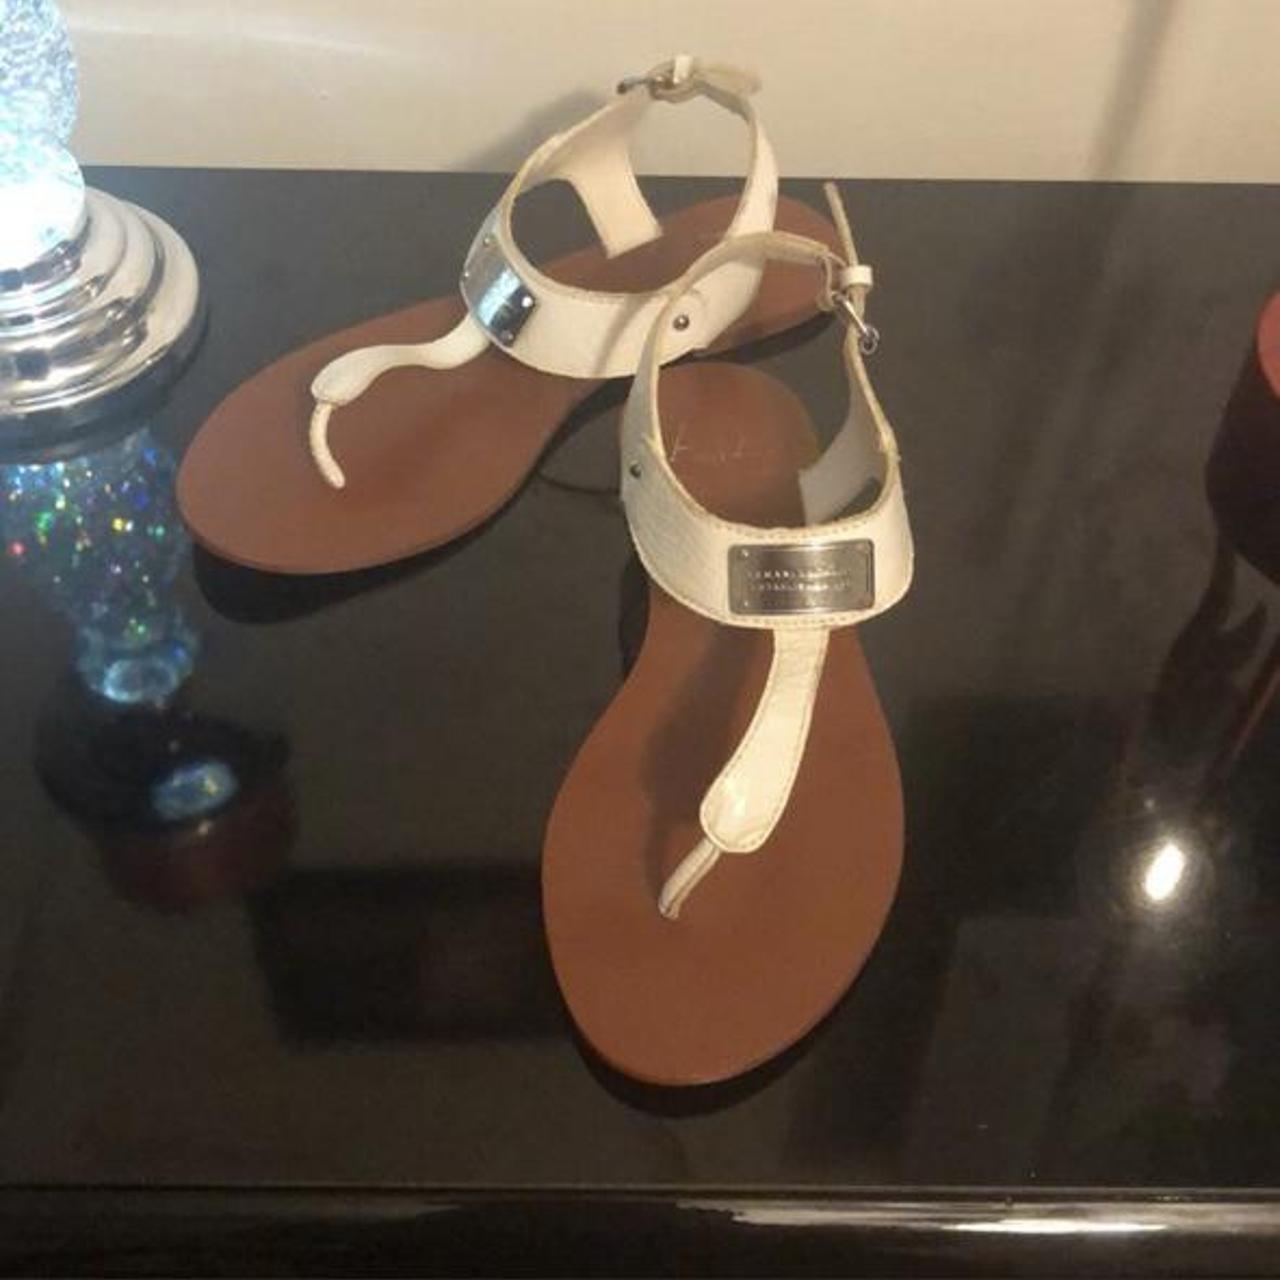 Armani Women's Tan and White Sandals